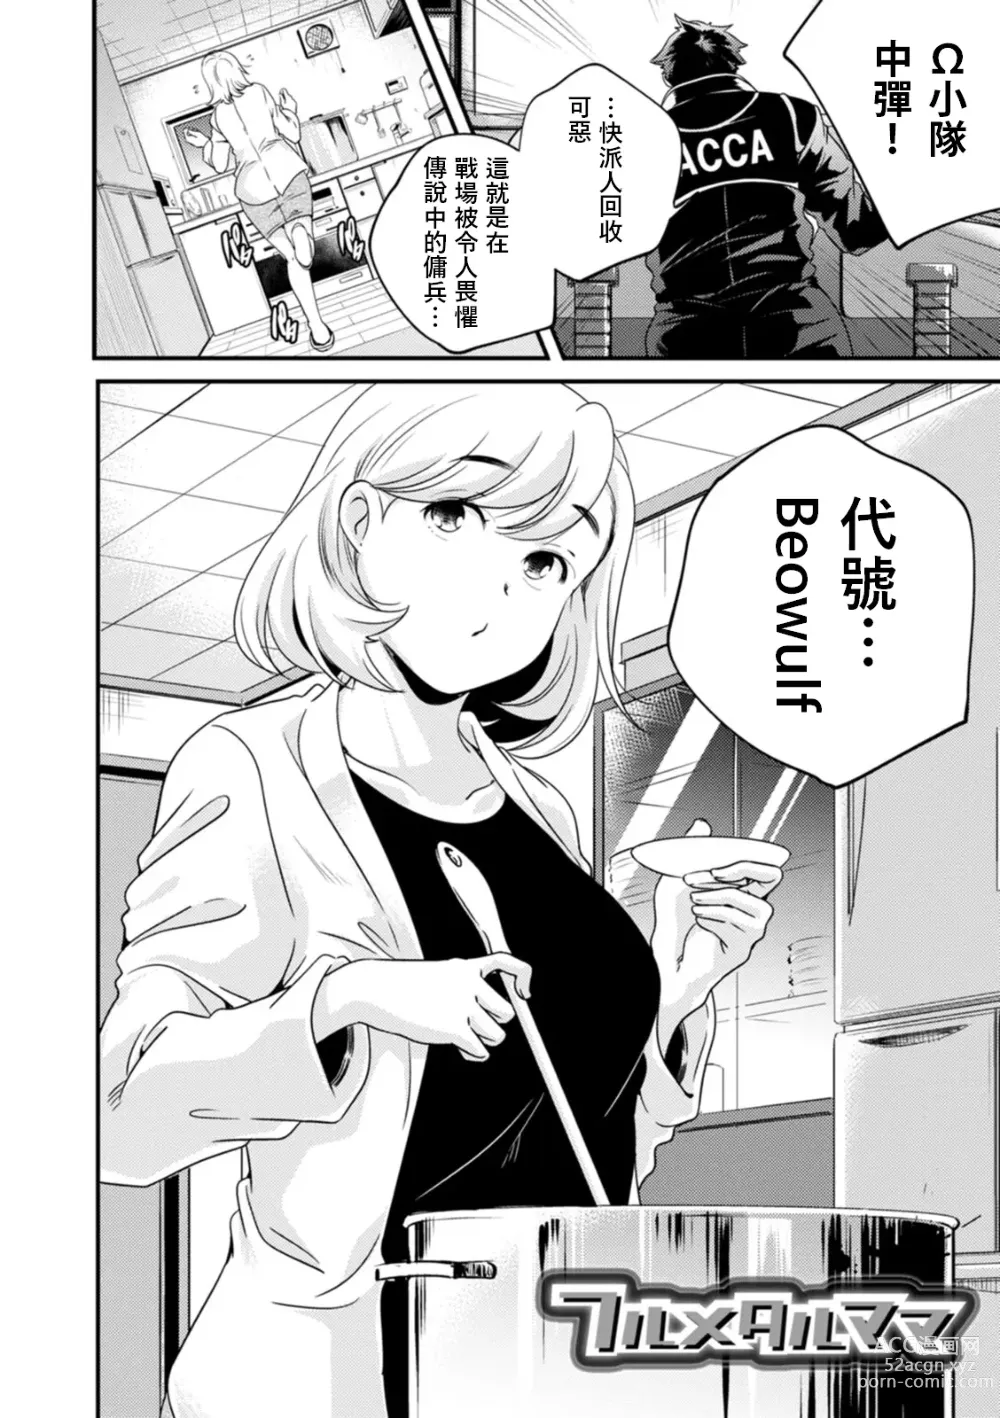 Page 2 of manga Full Metal Mama